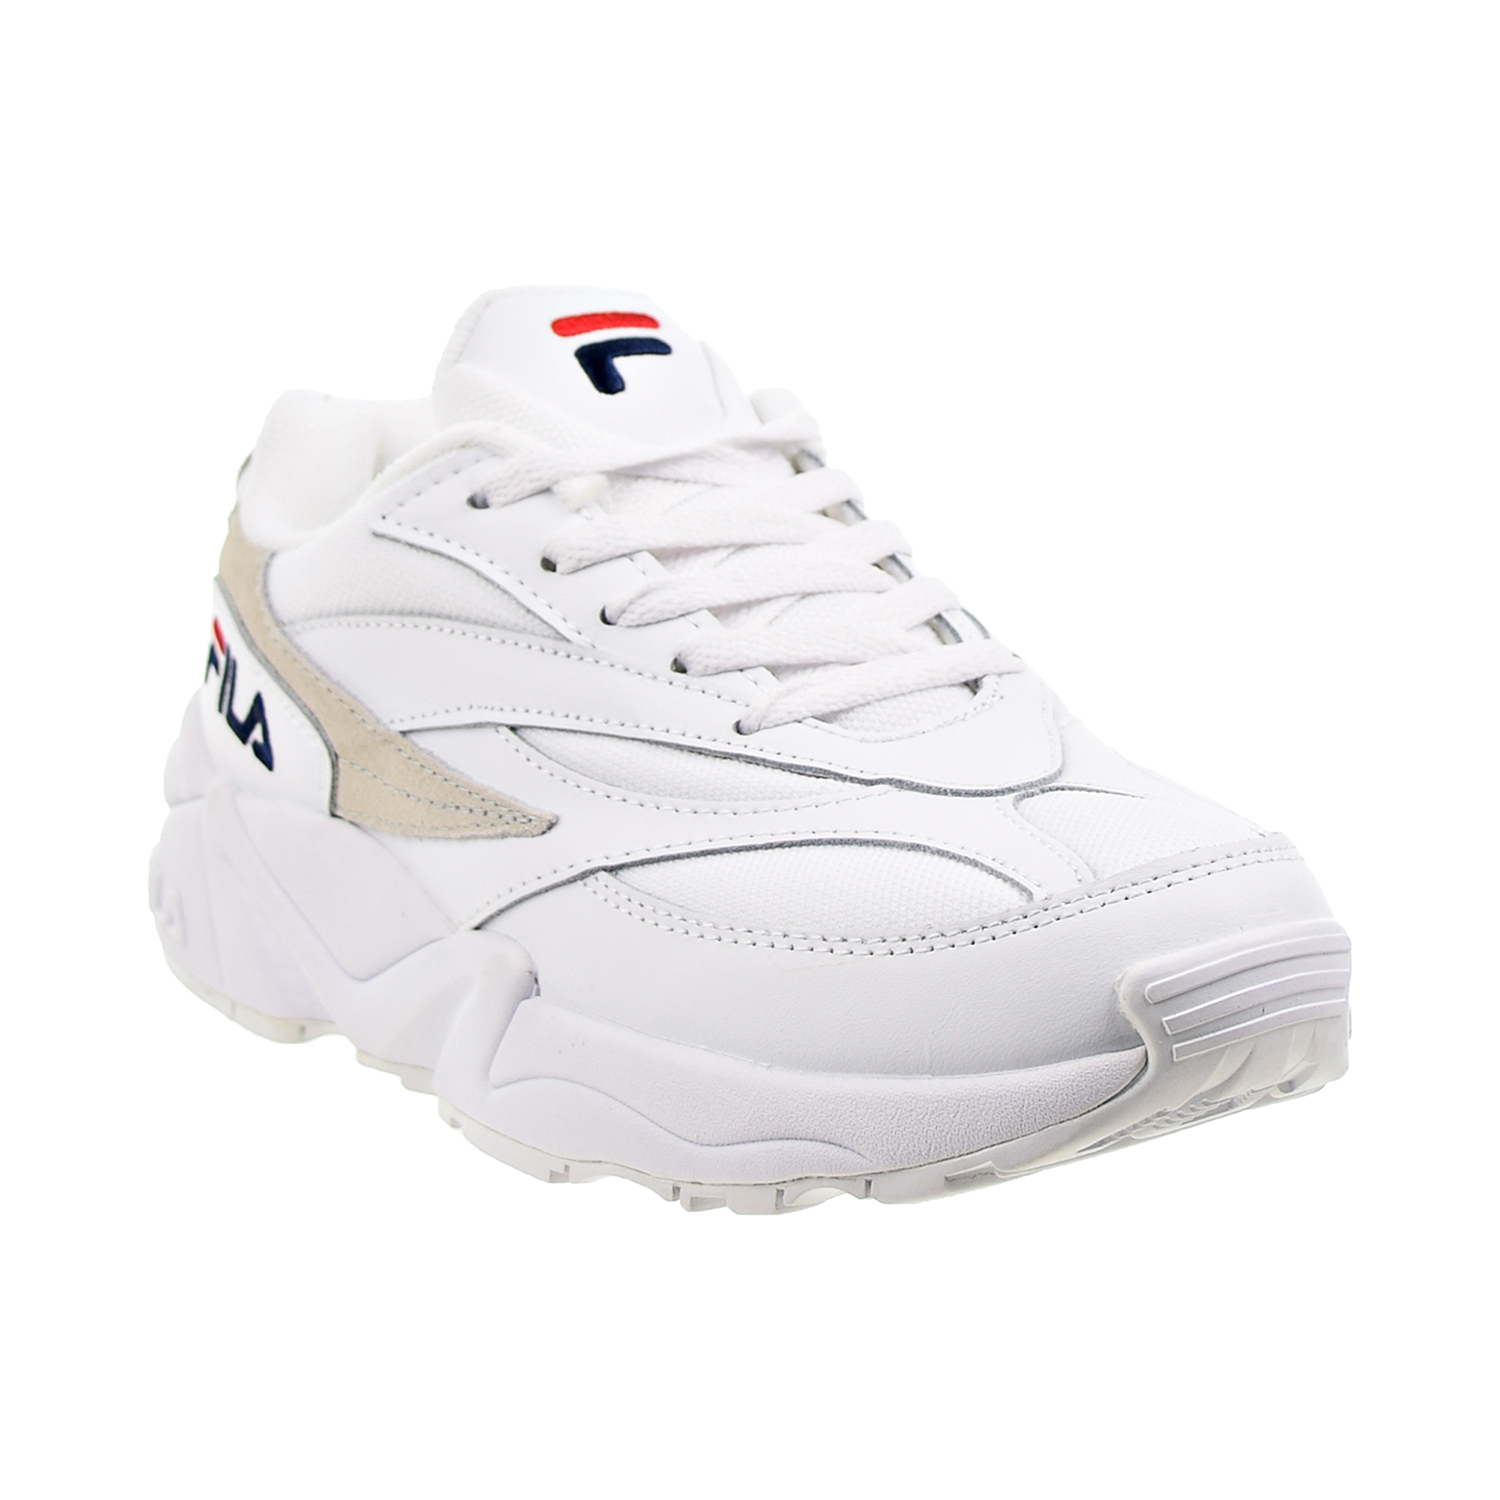 Fila V94M Men's Shoes White-Fila Navy-Fila Red 1rm00584-125